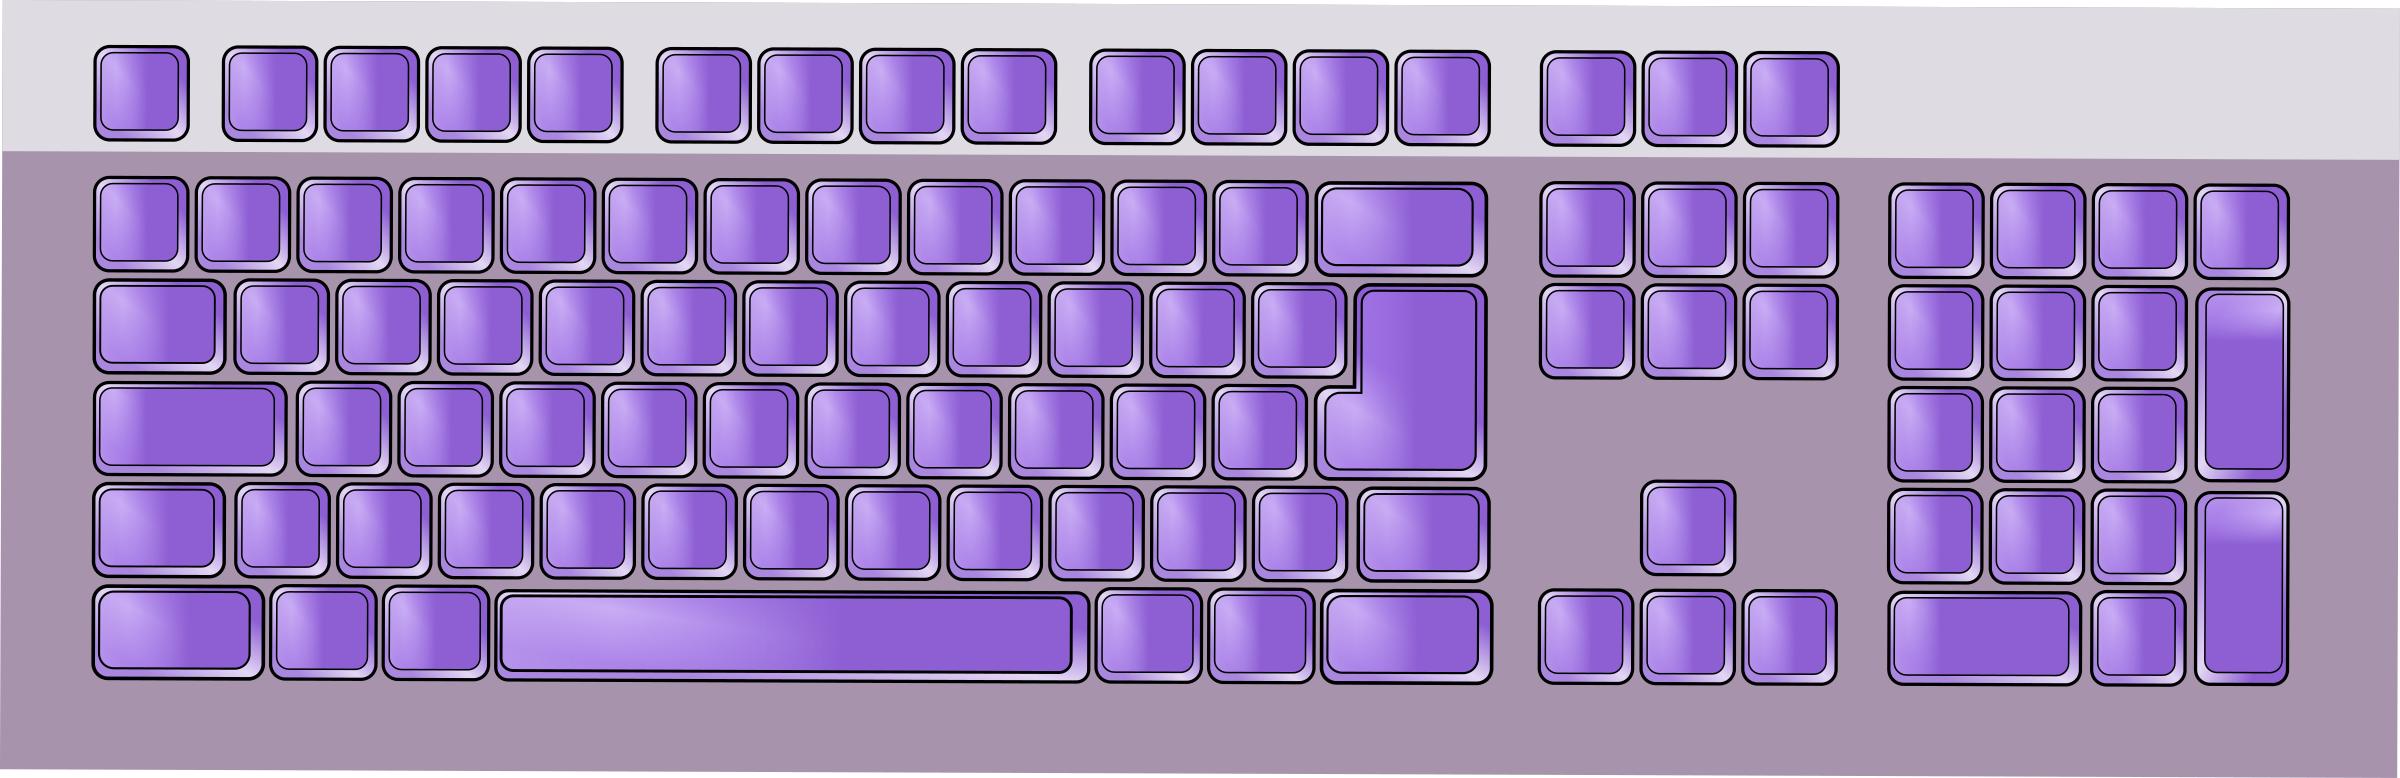 keyboard png